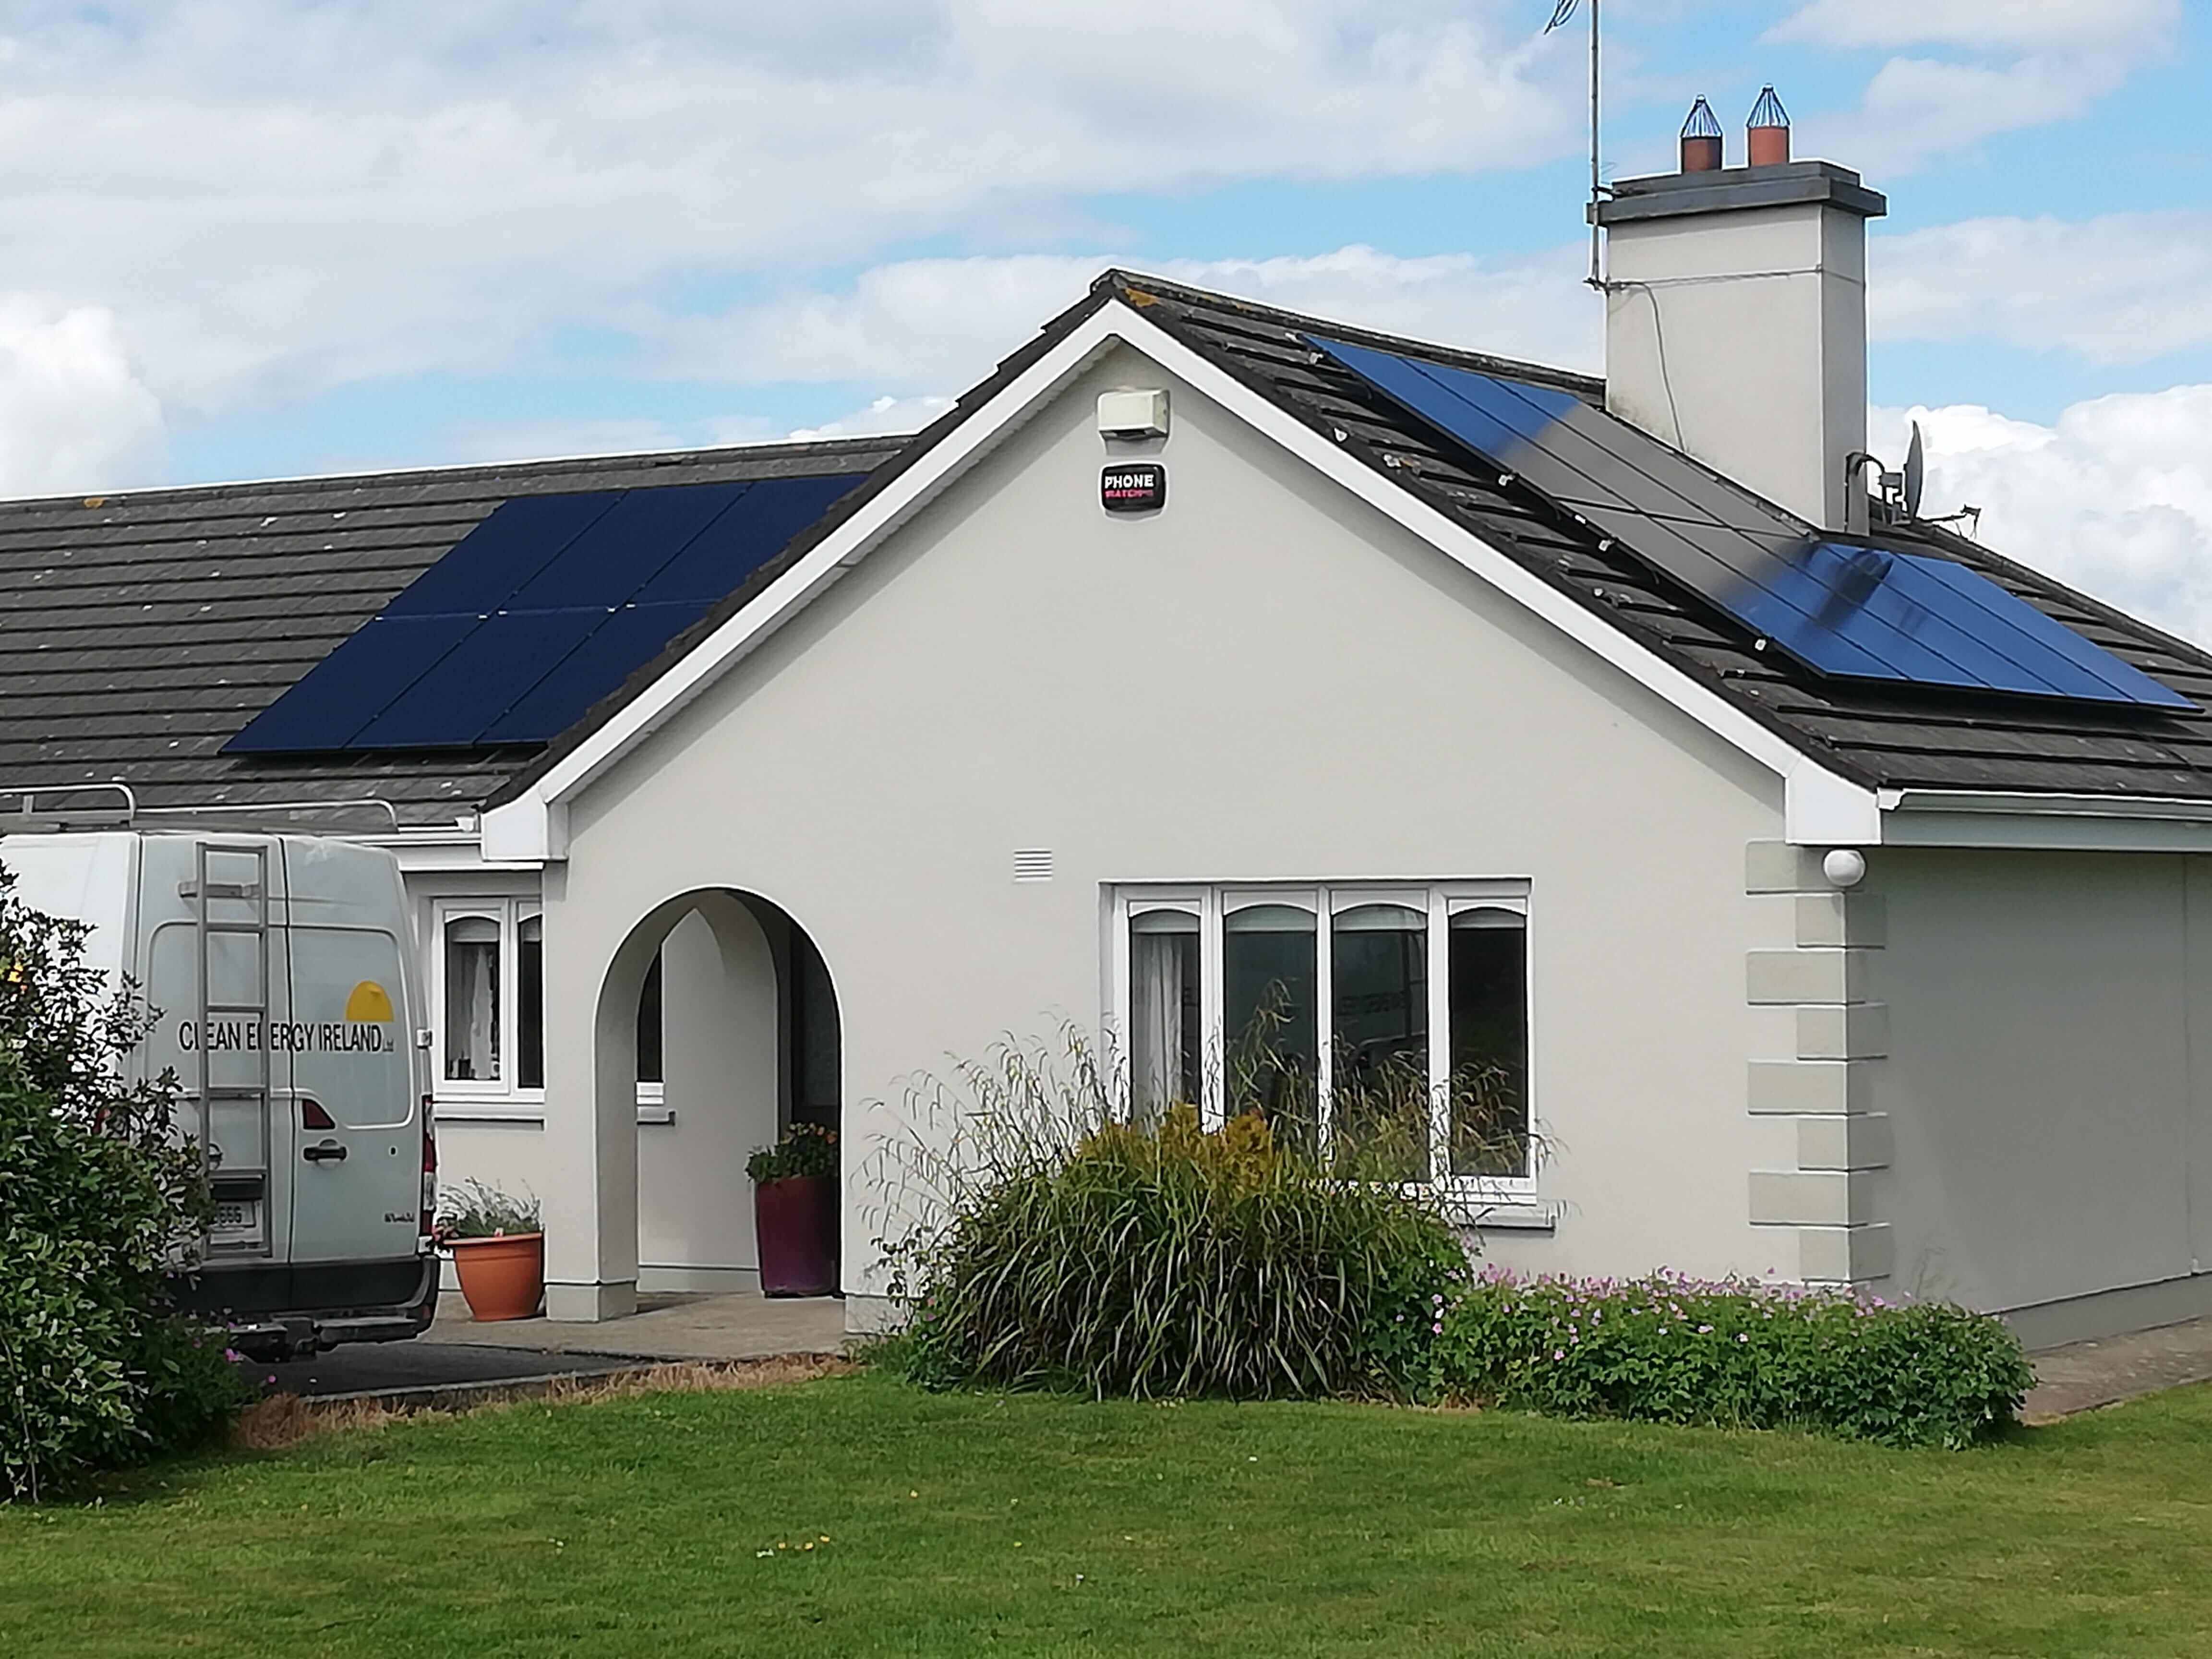 solar-pv-grants-clean-energy-ireland-renewable-energy